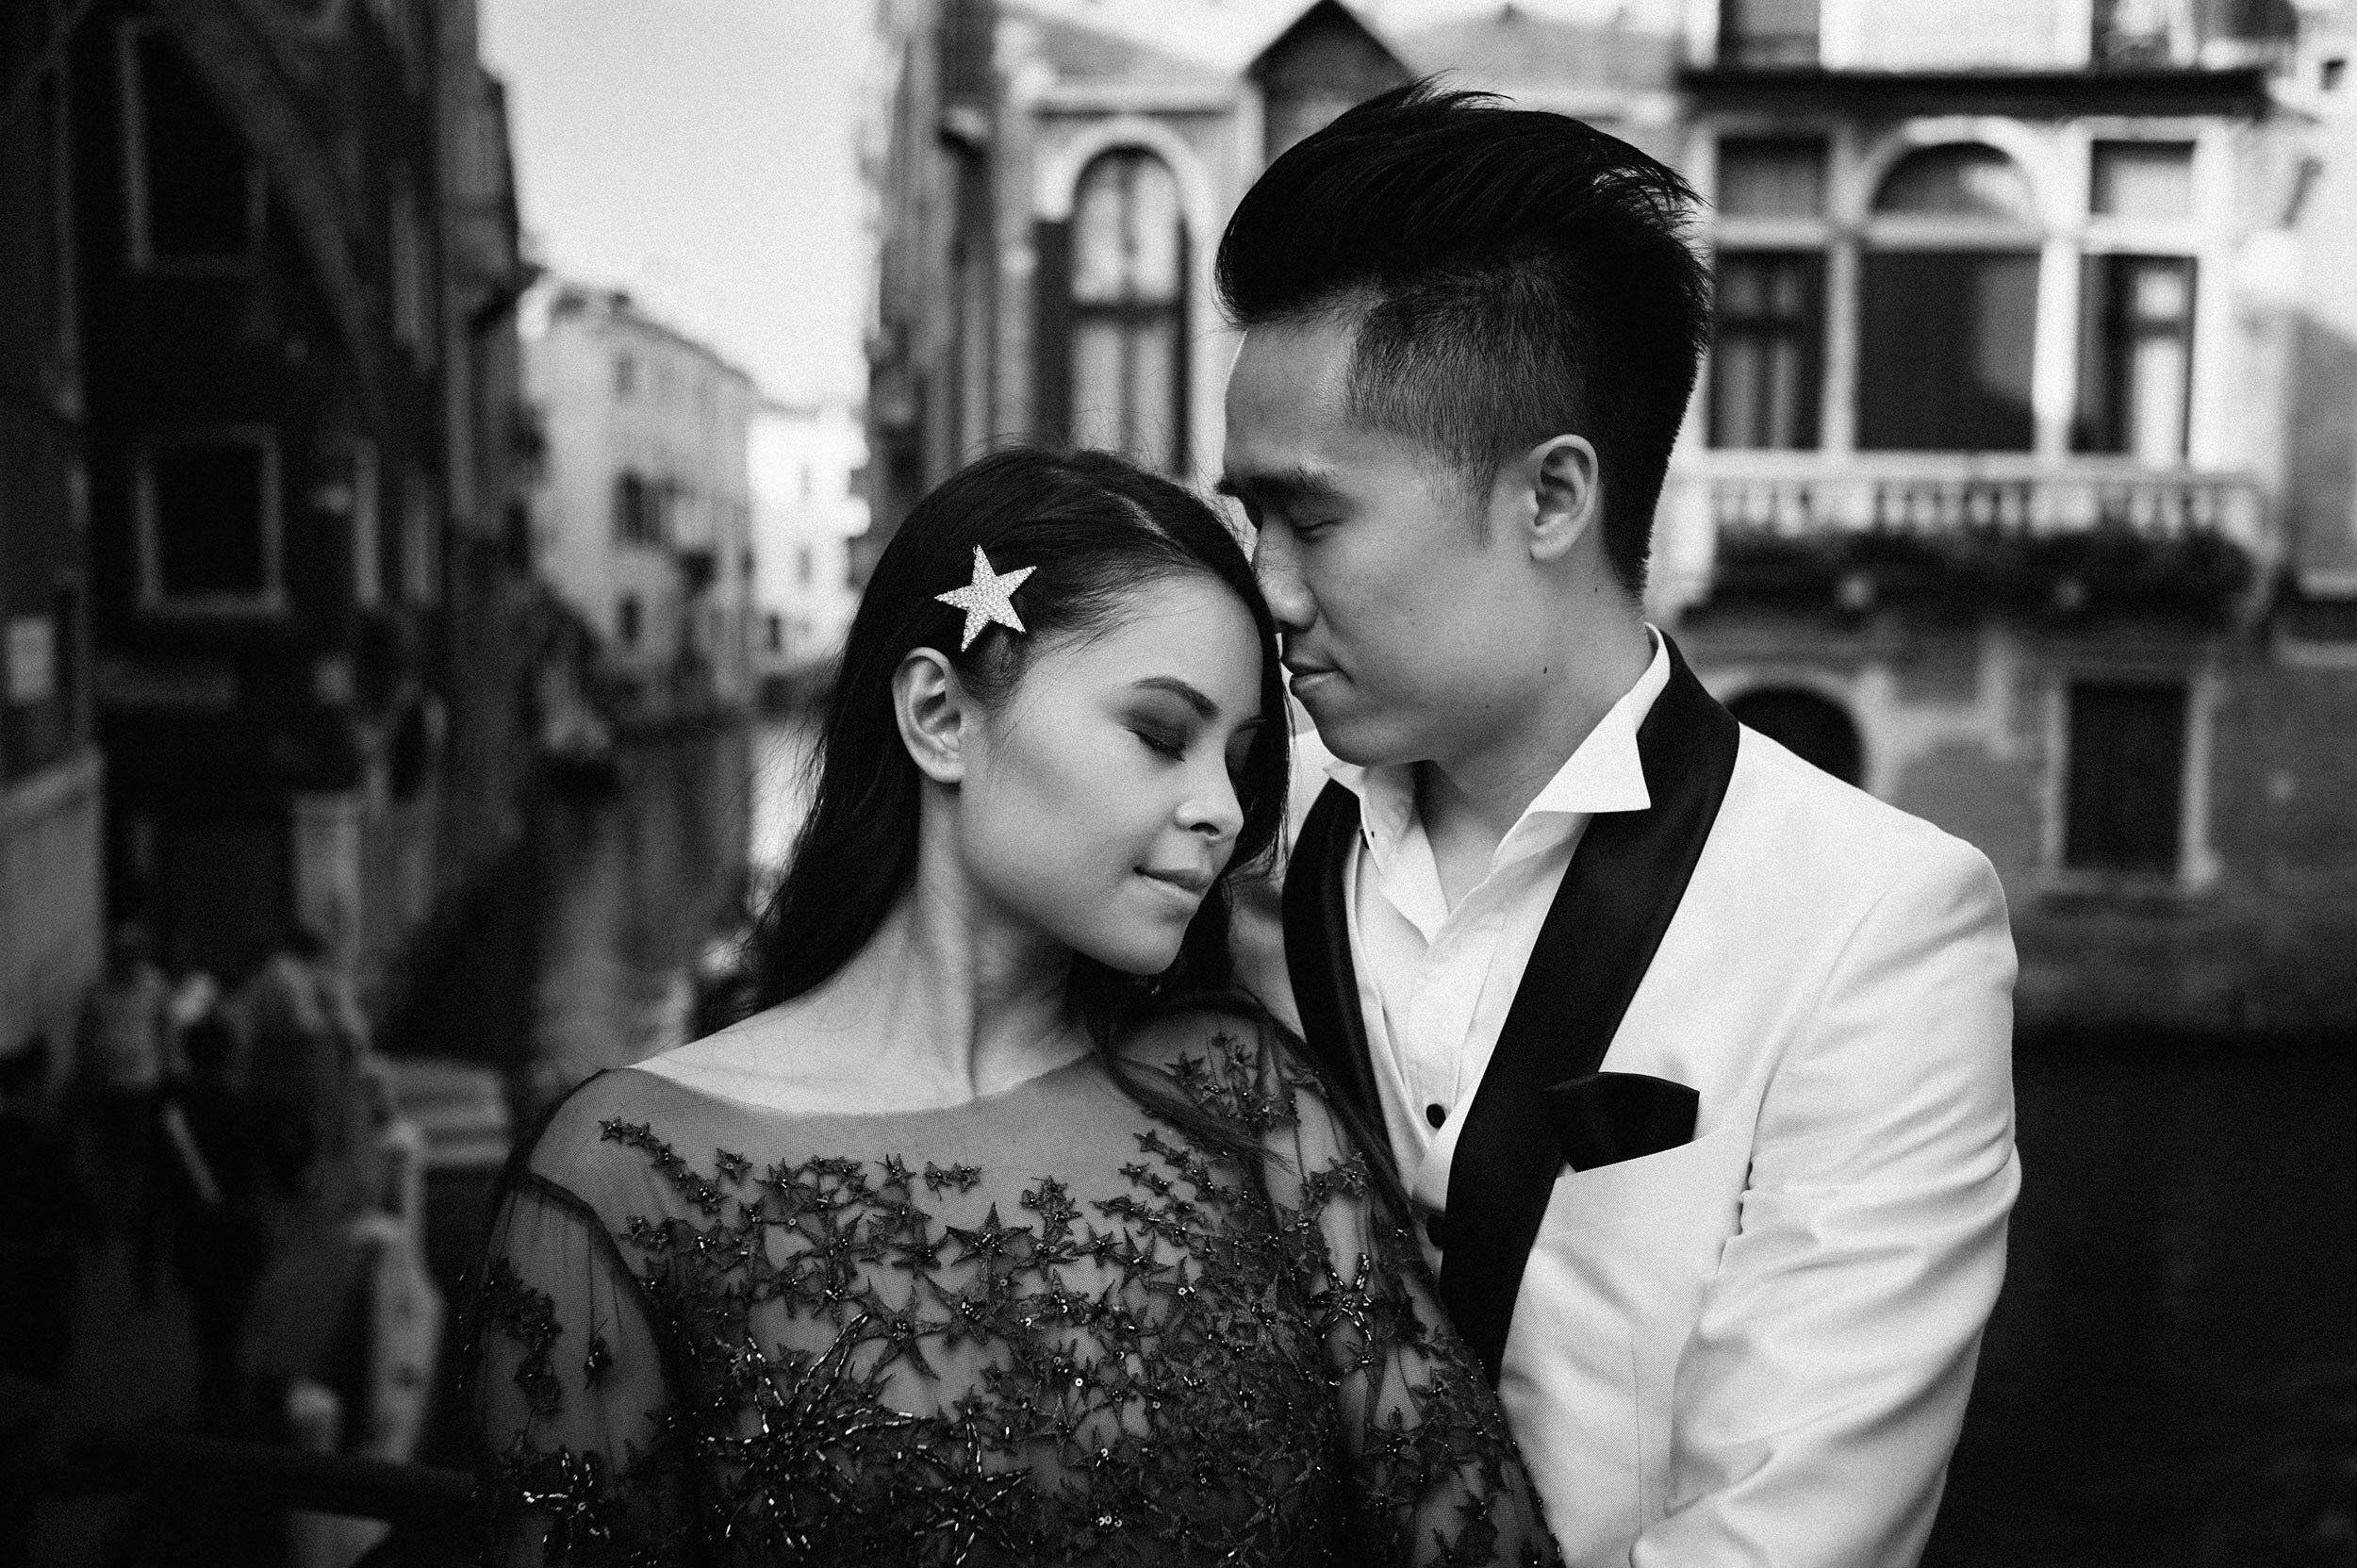 Engagement-in-Venice-Pre-Wedding-Photographer-Italy-Alessandro-Avenali-2018-9.jpg